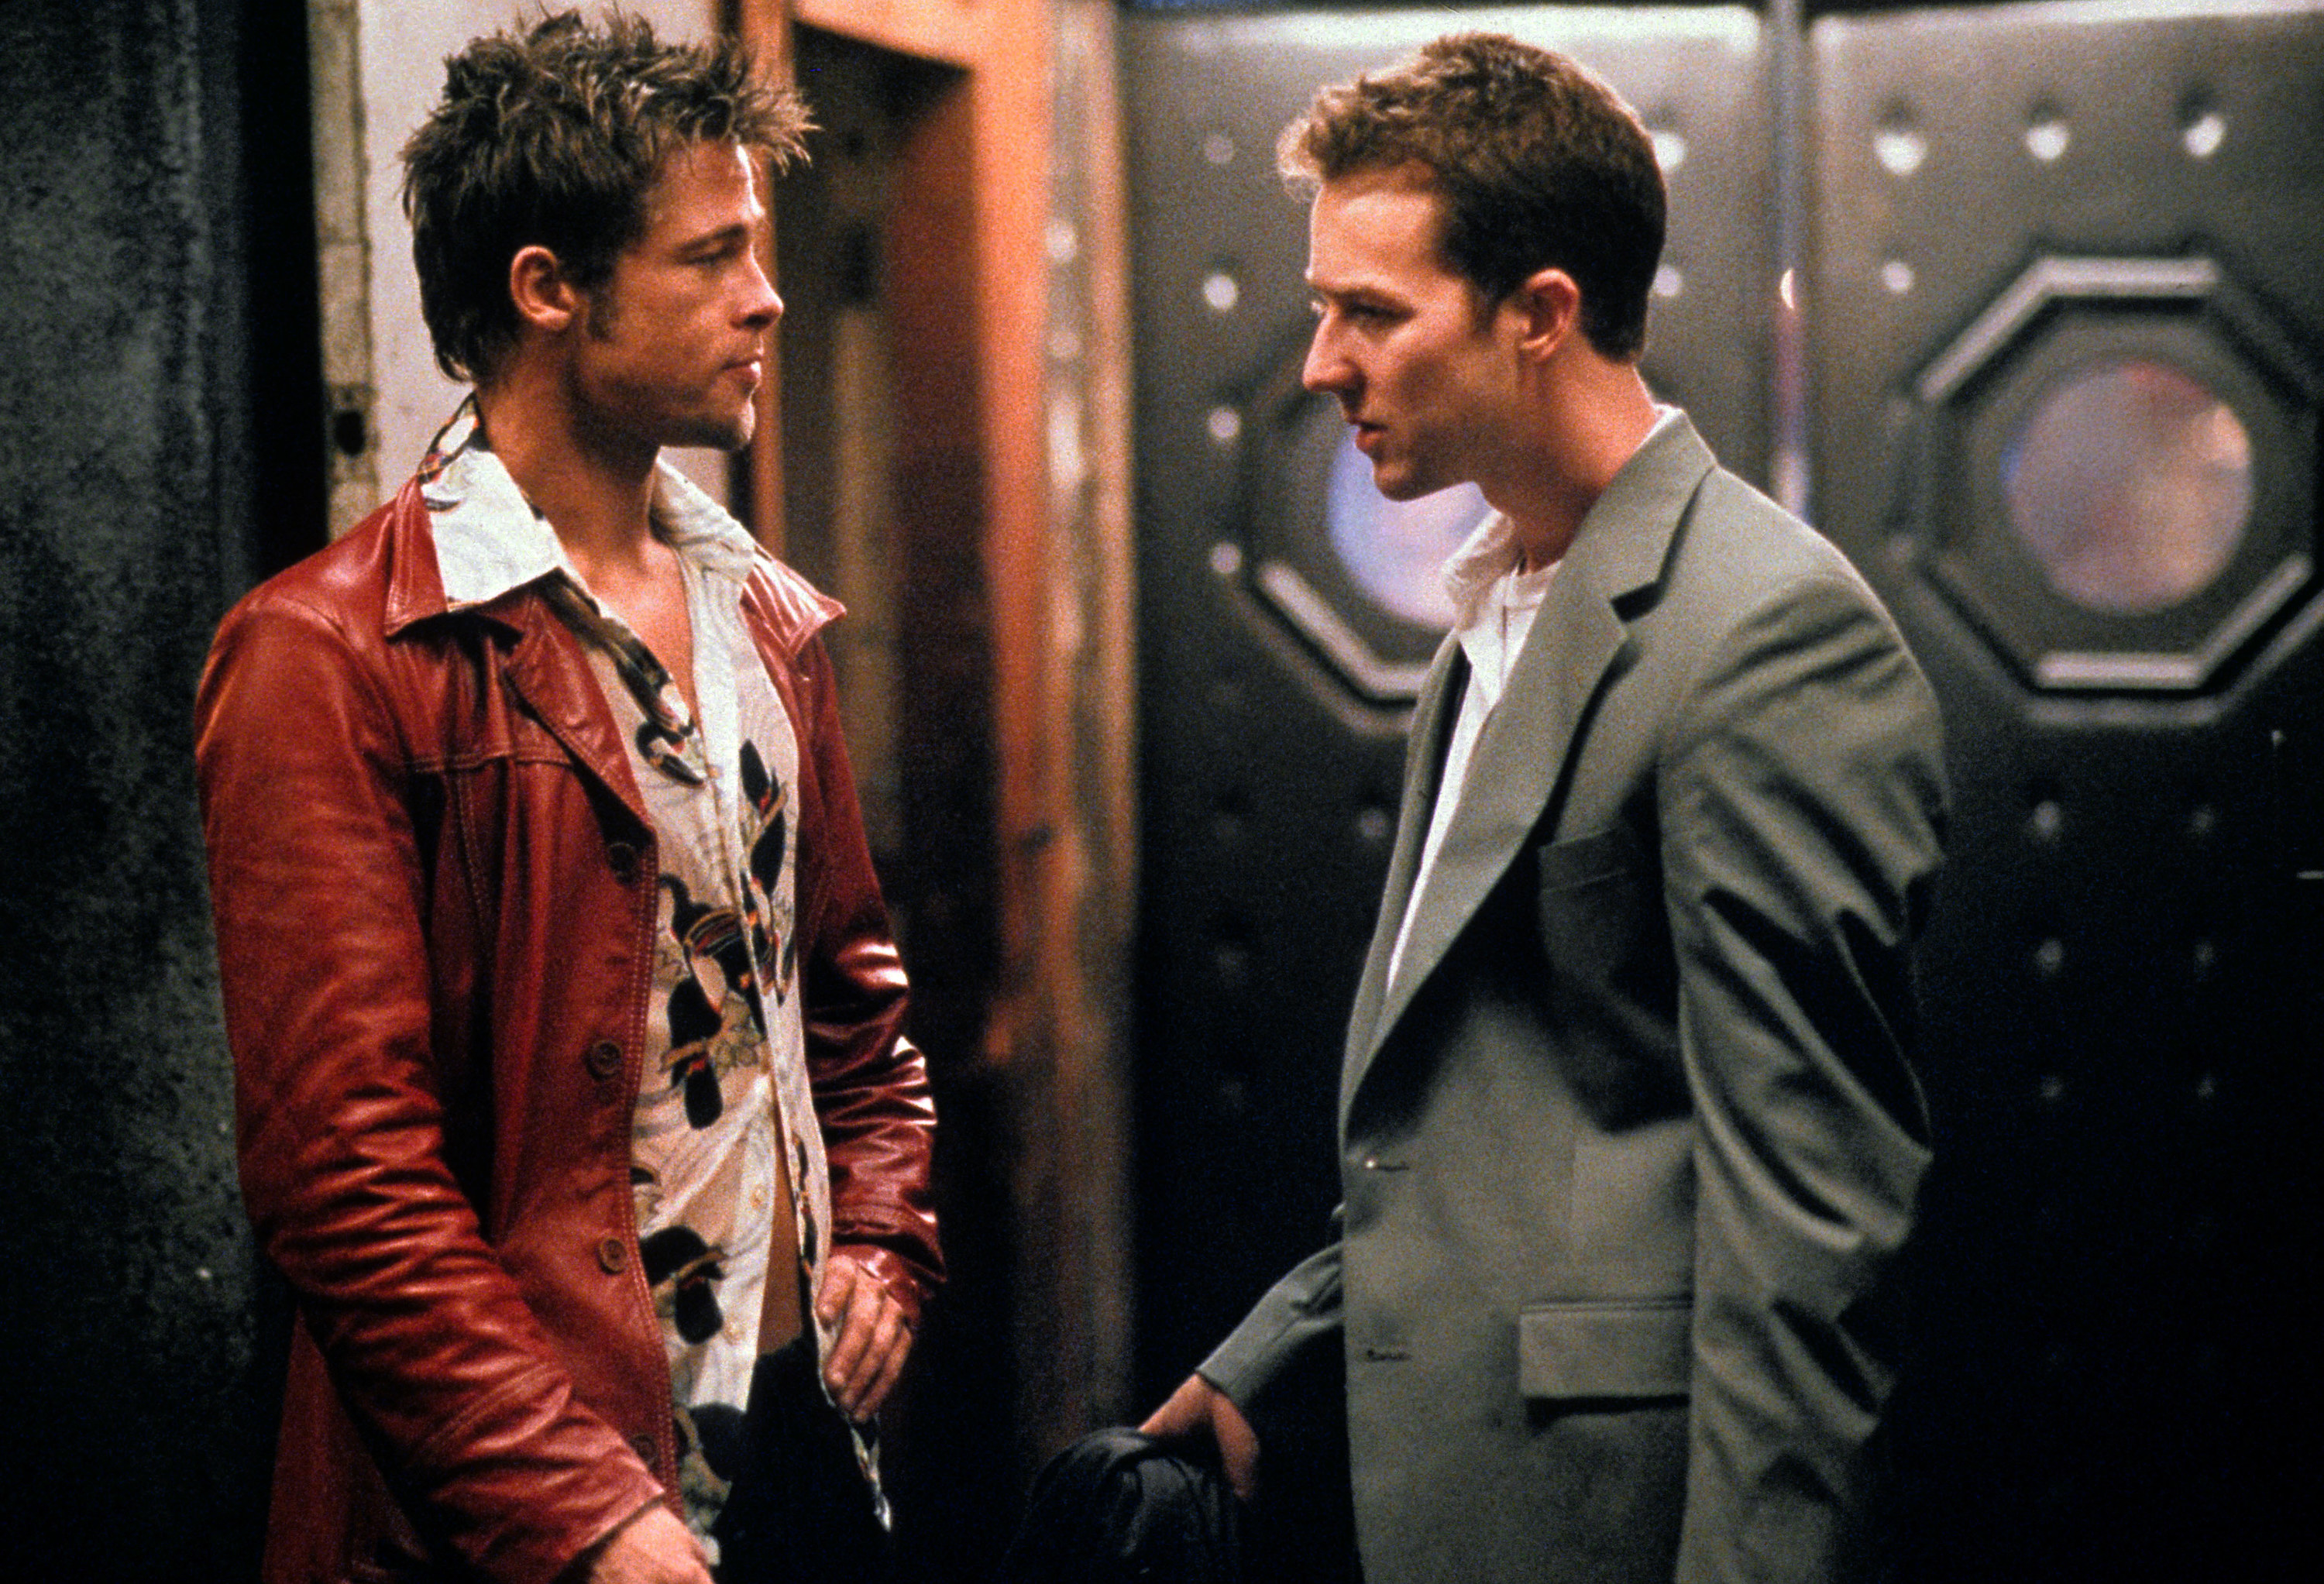 Brad Pitt talks with Edward Norton